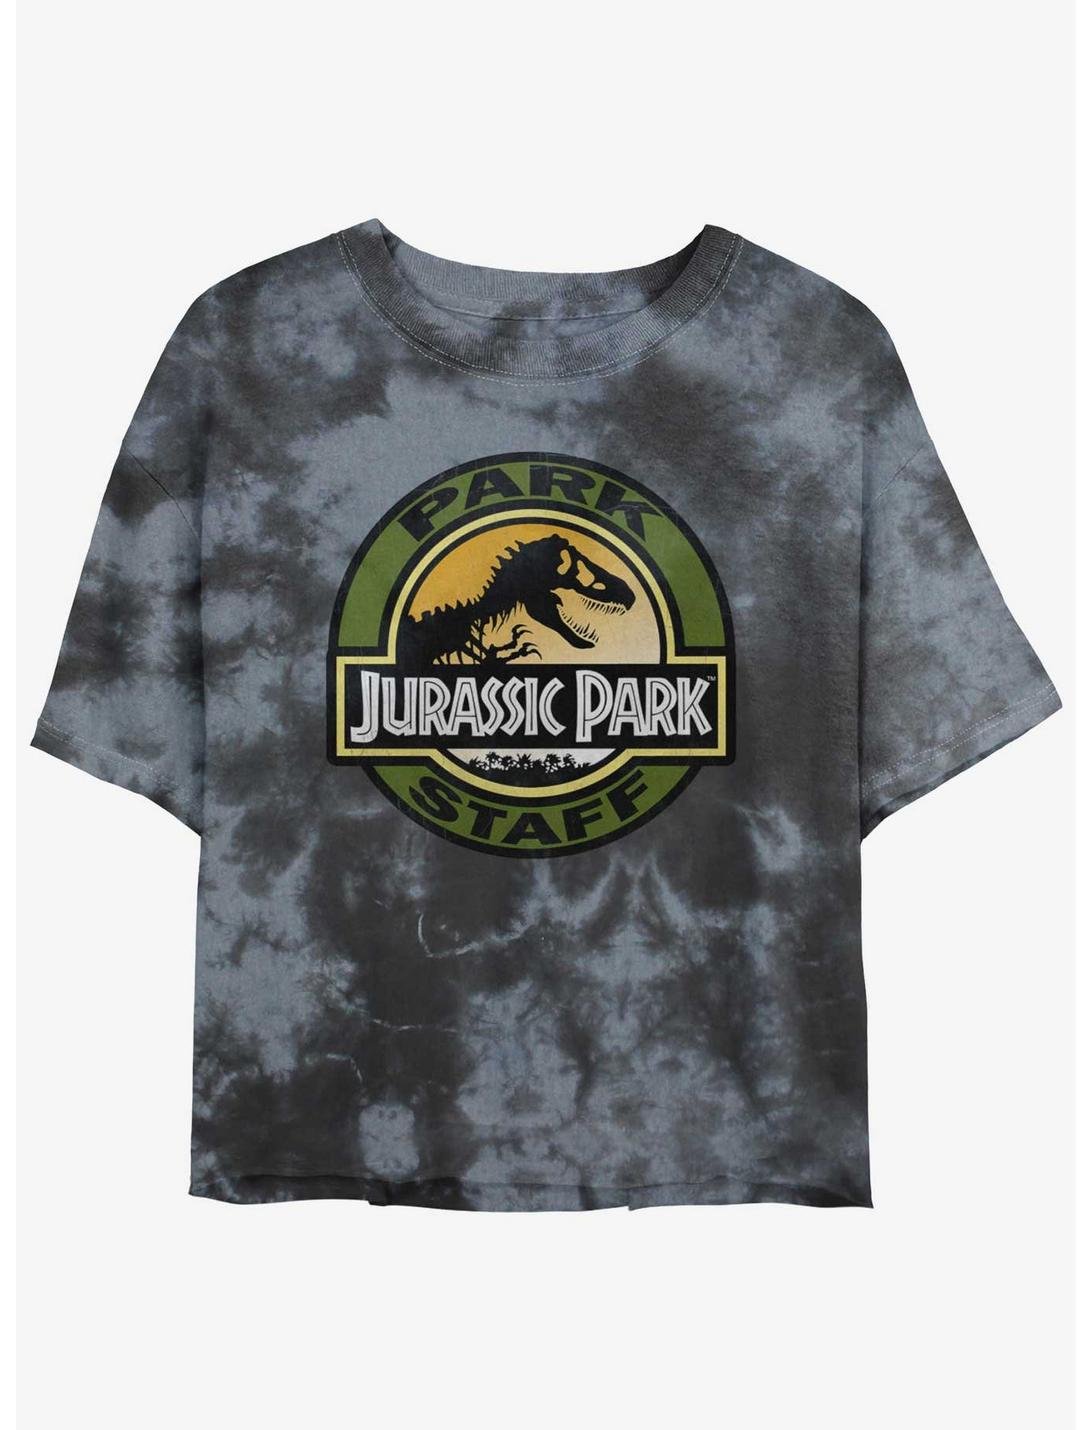 Jurassic Park Park Staff Womens Tie-Dye Crop T-Shirt, BLKCHAR, hi-res